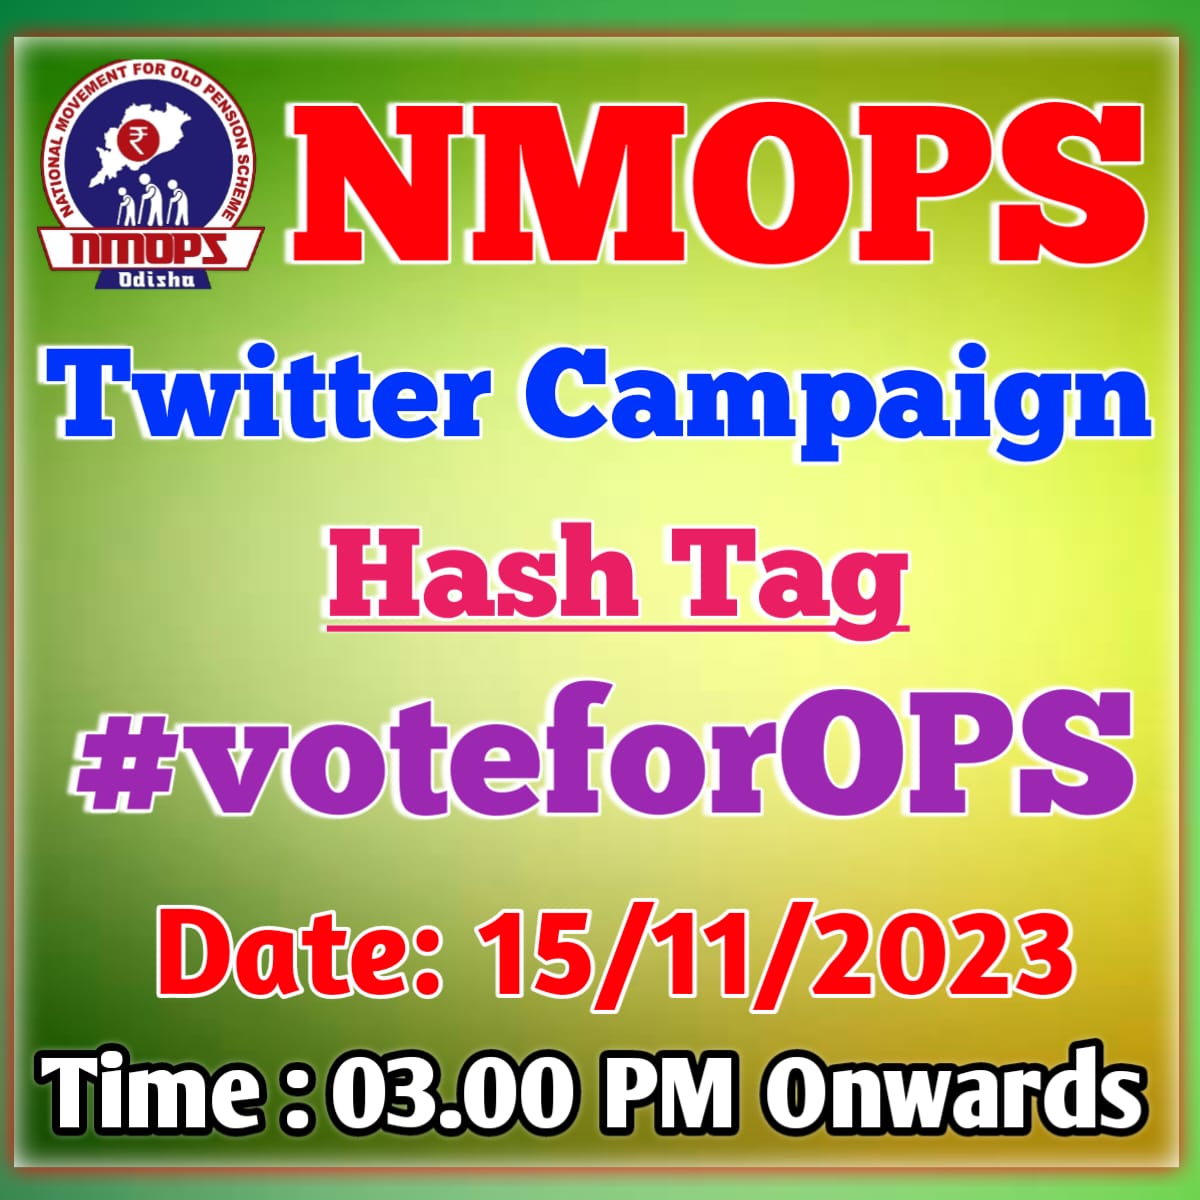 #voteforOPS
#OPS 
#odishawantops
#wewantops 
@CMO_Odisha
@Naveen_Odisha
@MoSarkar5T
@SecyChief
@PradeepJenaIAS
@DC_Odisha
@_anugarg
@kanak_news 
@NandighoshaTV 
@otvnews 
@badakhabarnews 
@ArgusNews_in 
@DDNewsOdia 
@Kalingatv 
@MBCTVODISHA
@ArgusNews_in 
@NaxatraNewsOdia